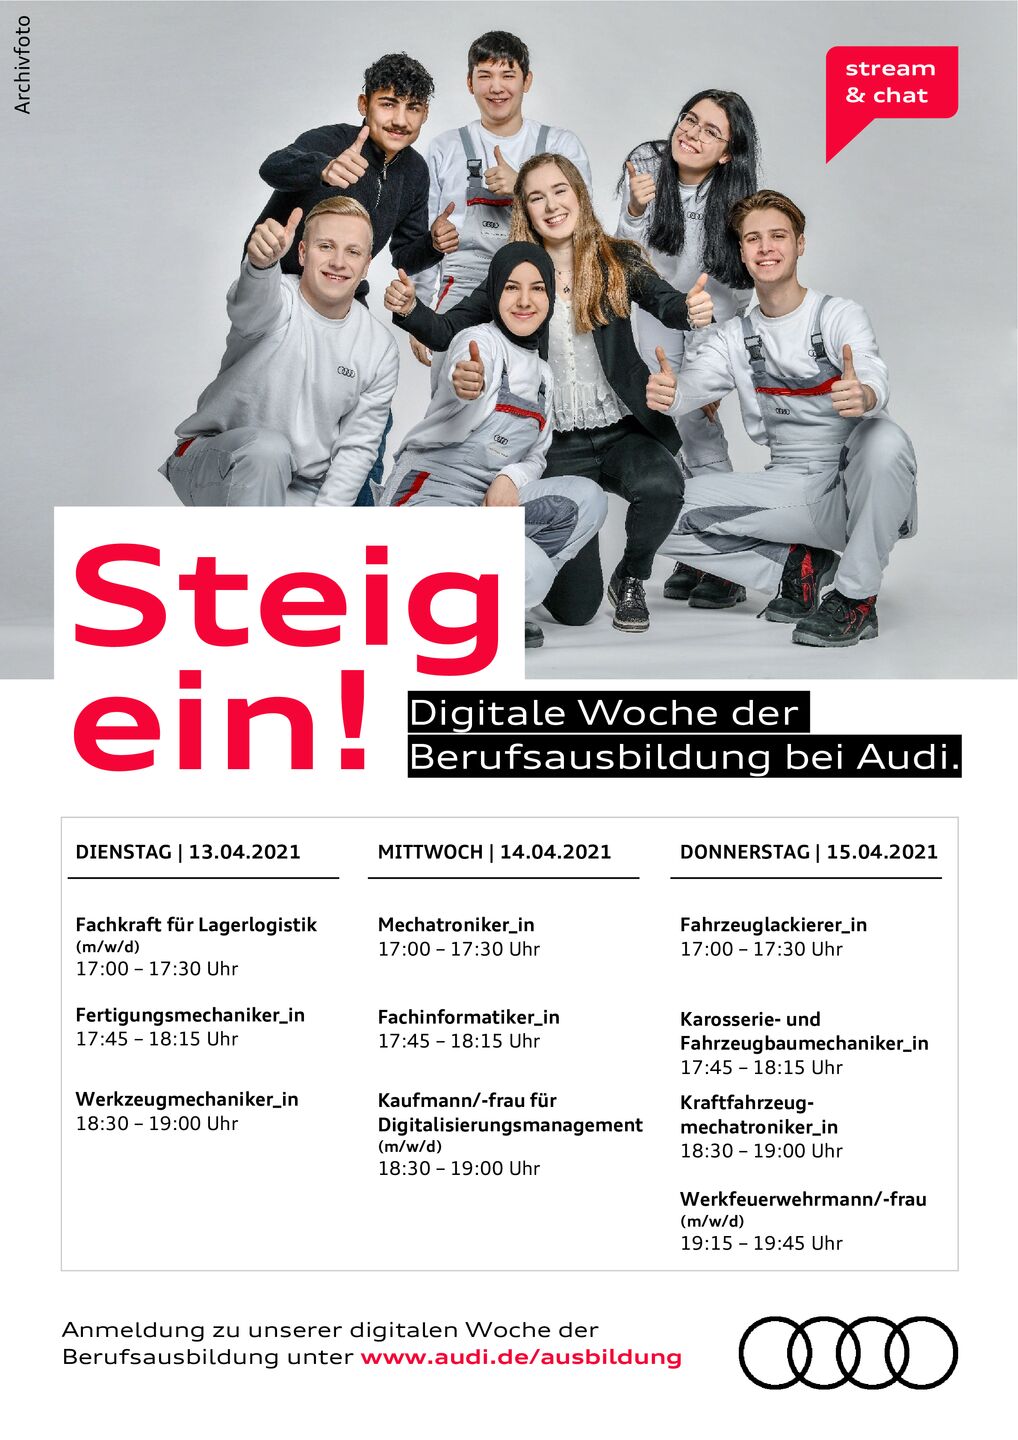 Dates for the digital week of apprenticeships at Audi Ingolstadt.